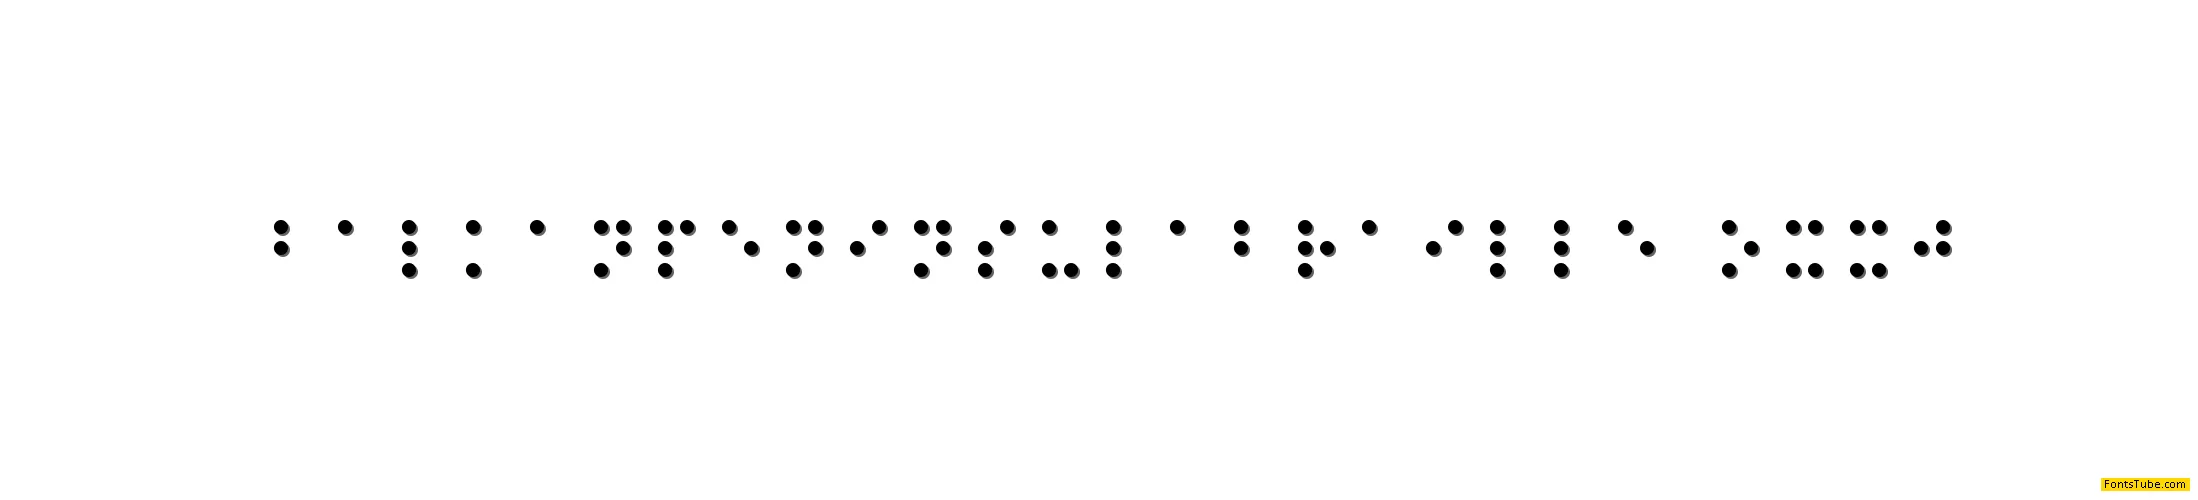 Balkan Peninsula Braille